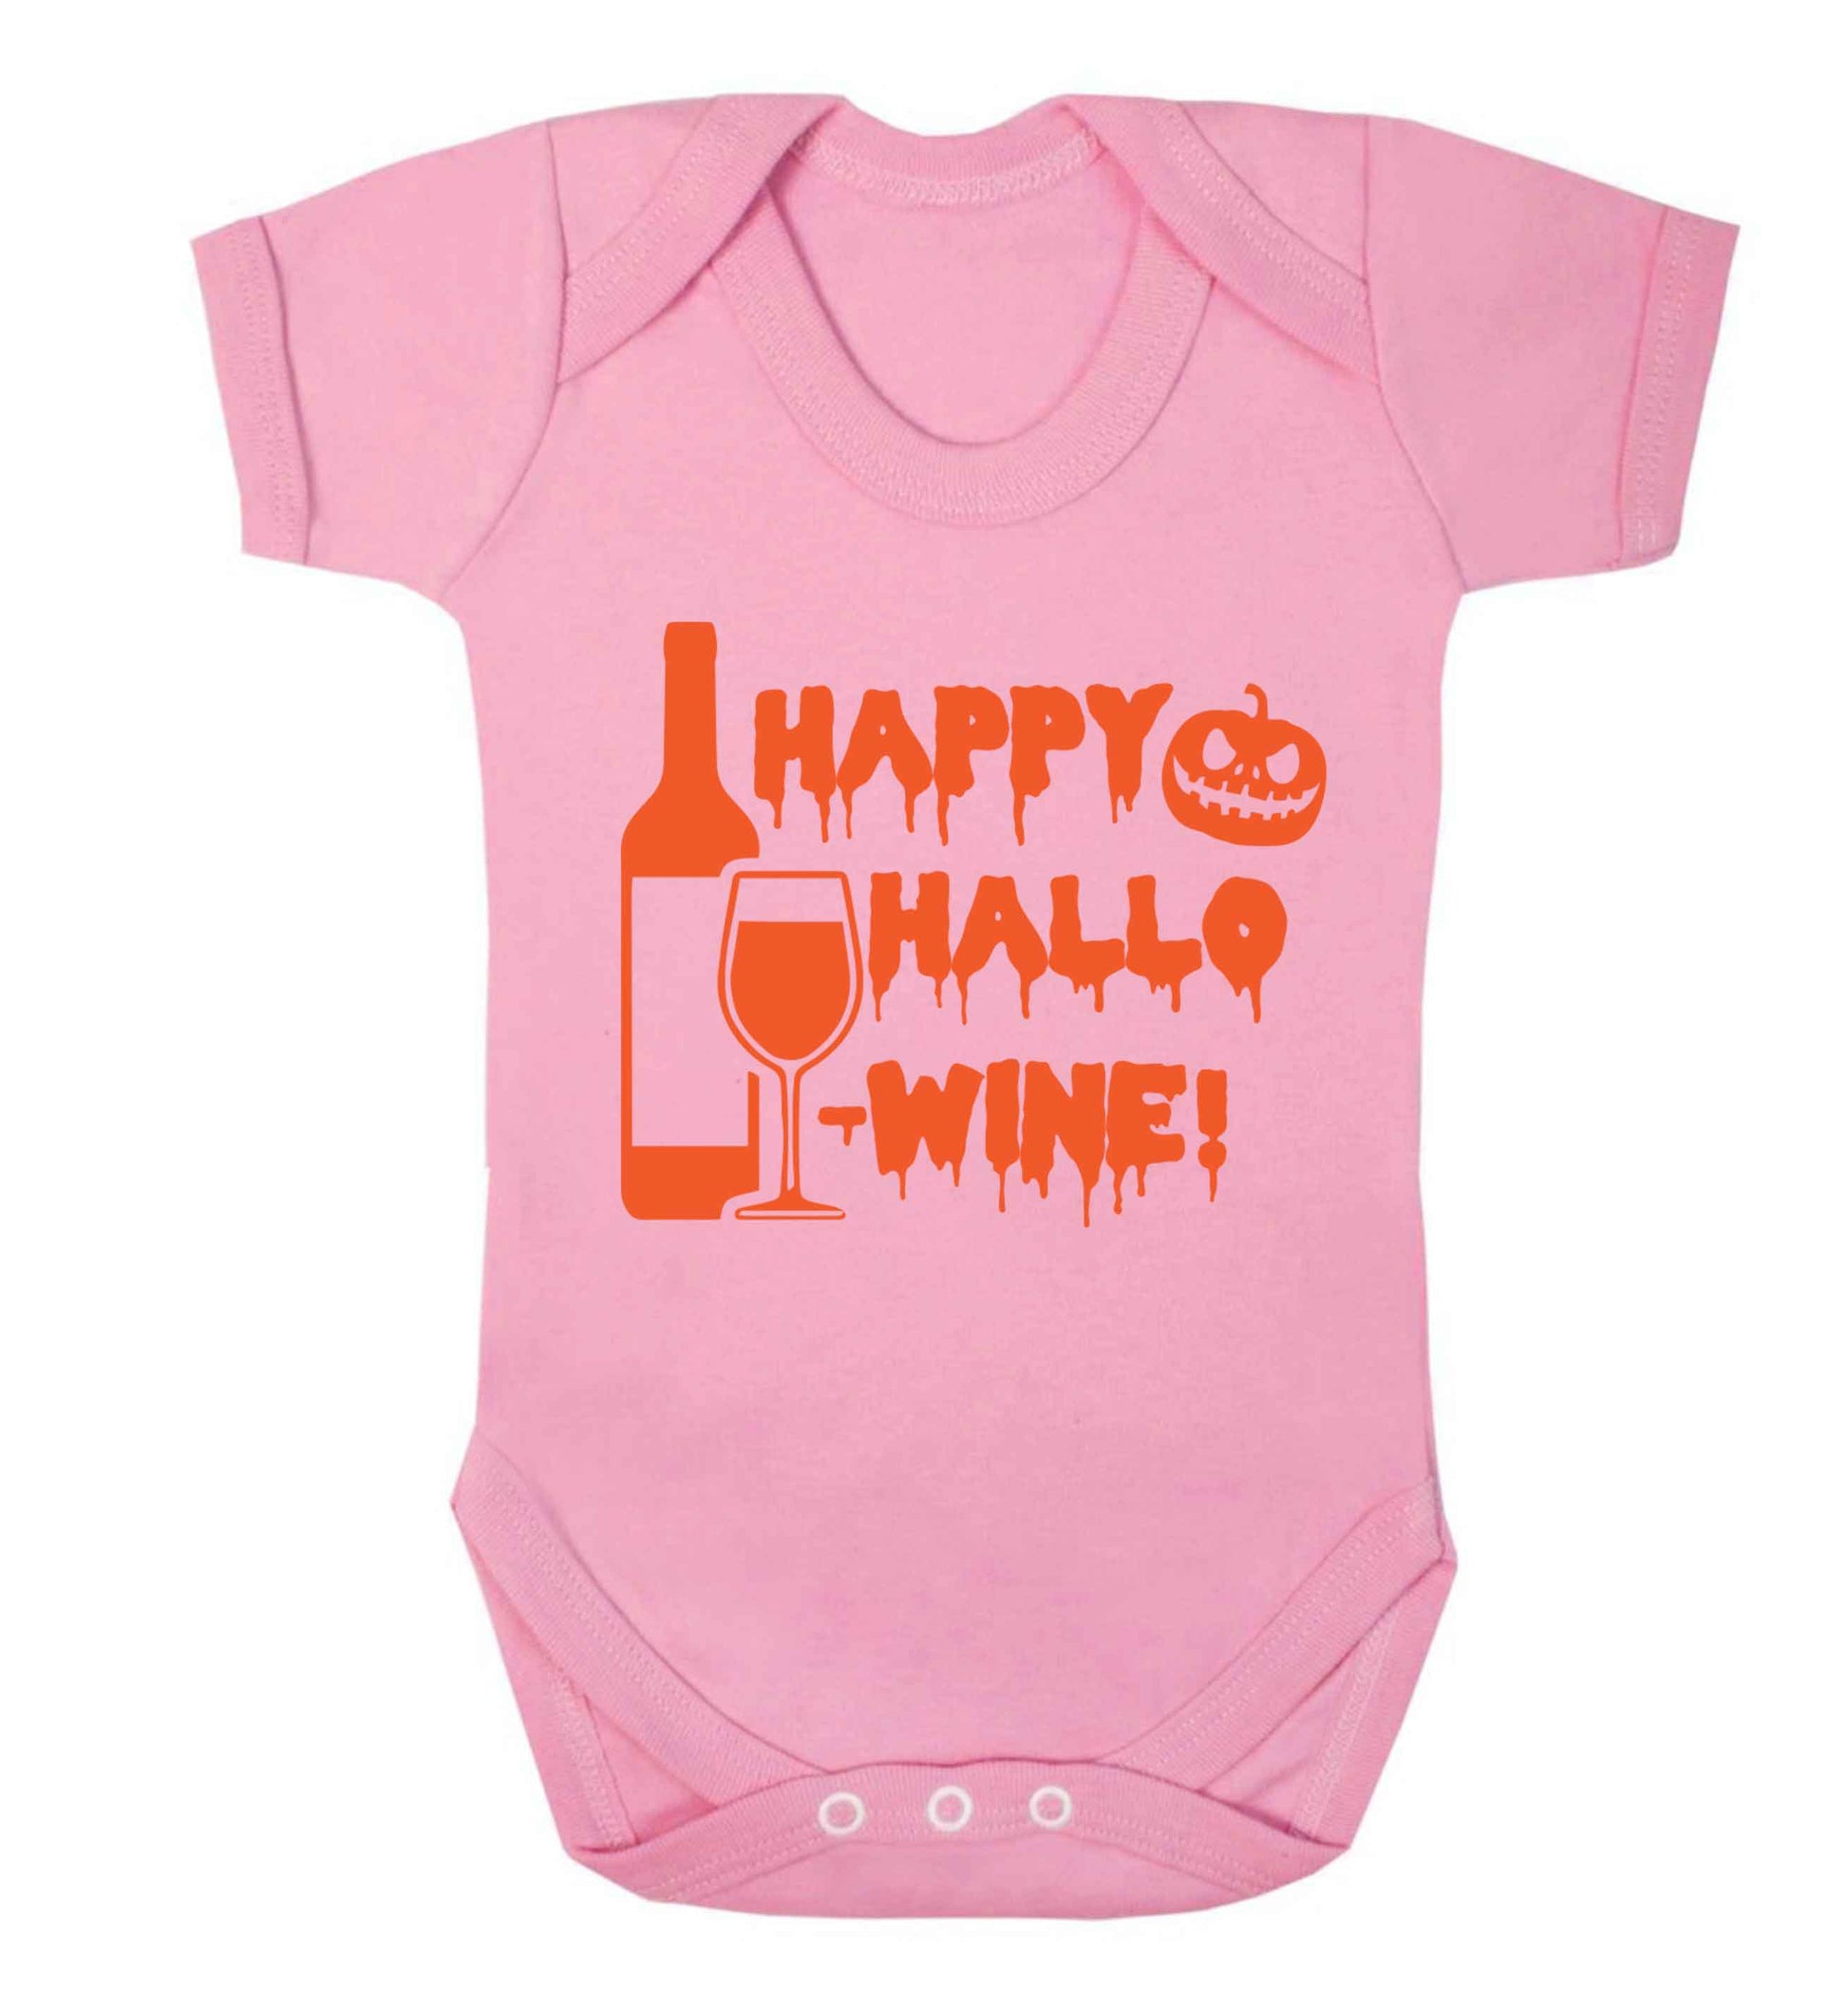 Happy hallow-wine Baby Vest pale pink 18-24 months